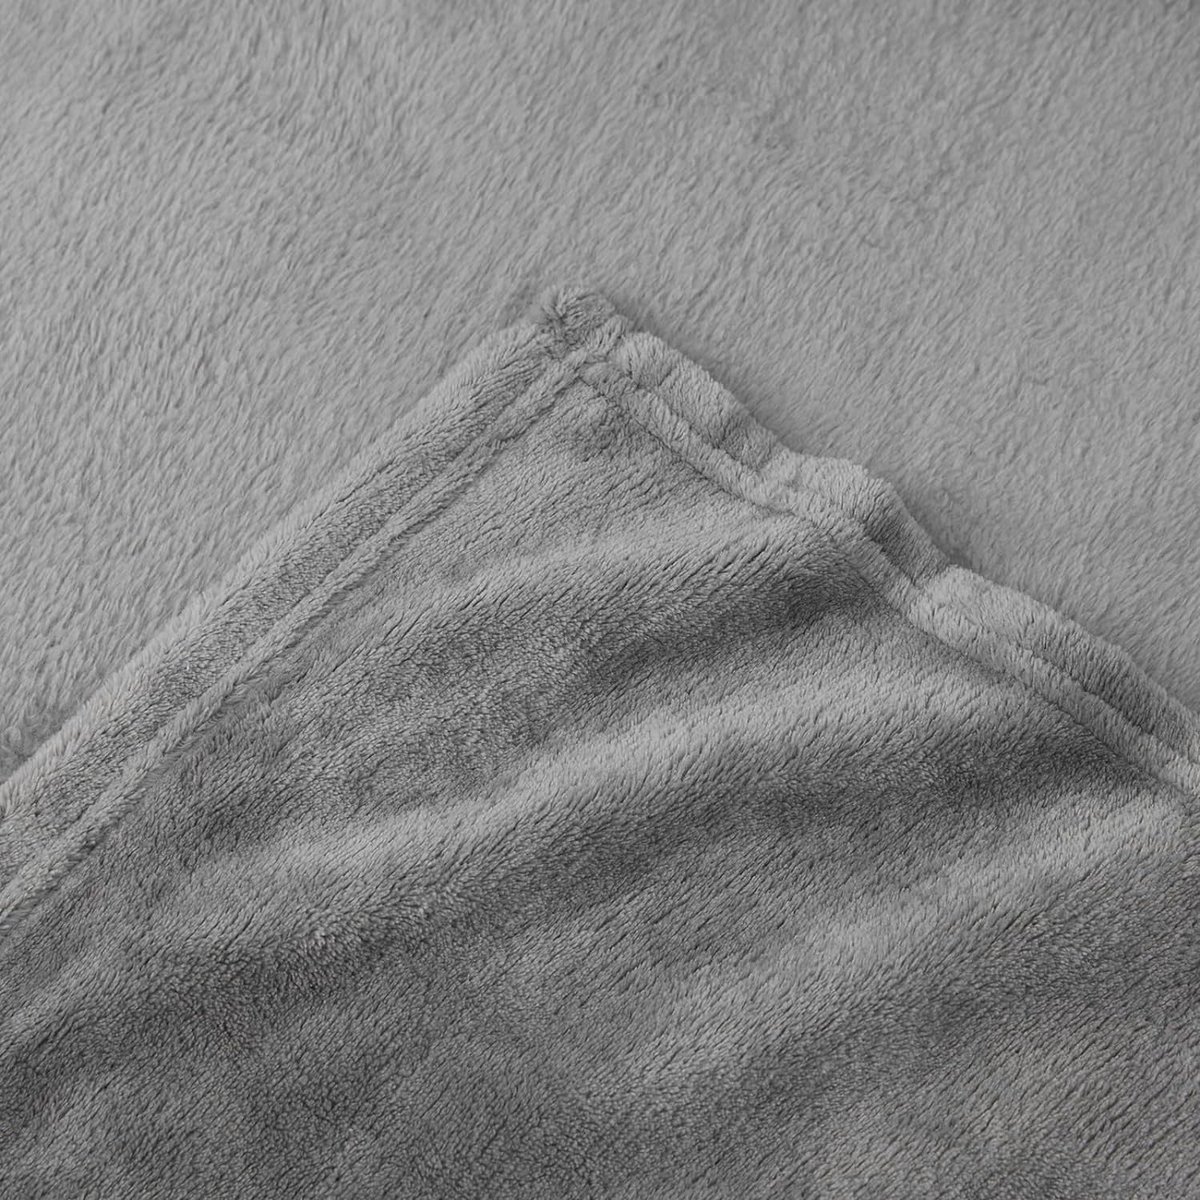 Knuffeldeken wollig fleecedeken grijs deken bank XL 150 x 200 cm warme bankdeken knuffelige woondeken lichtgrijs zacht als woonkamer deken bankdeken